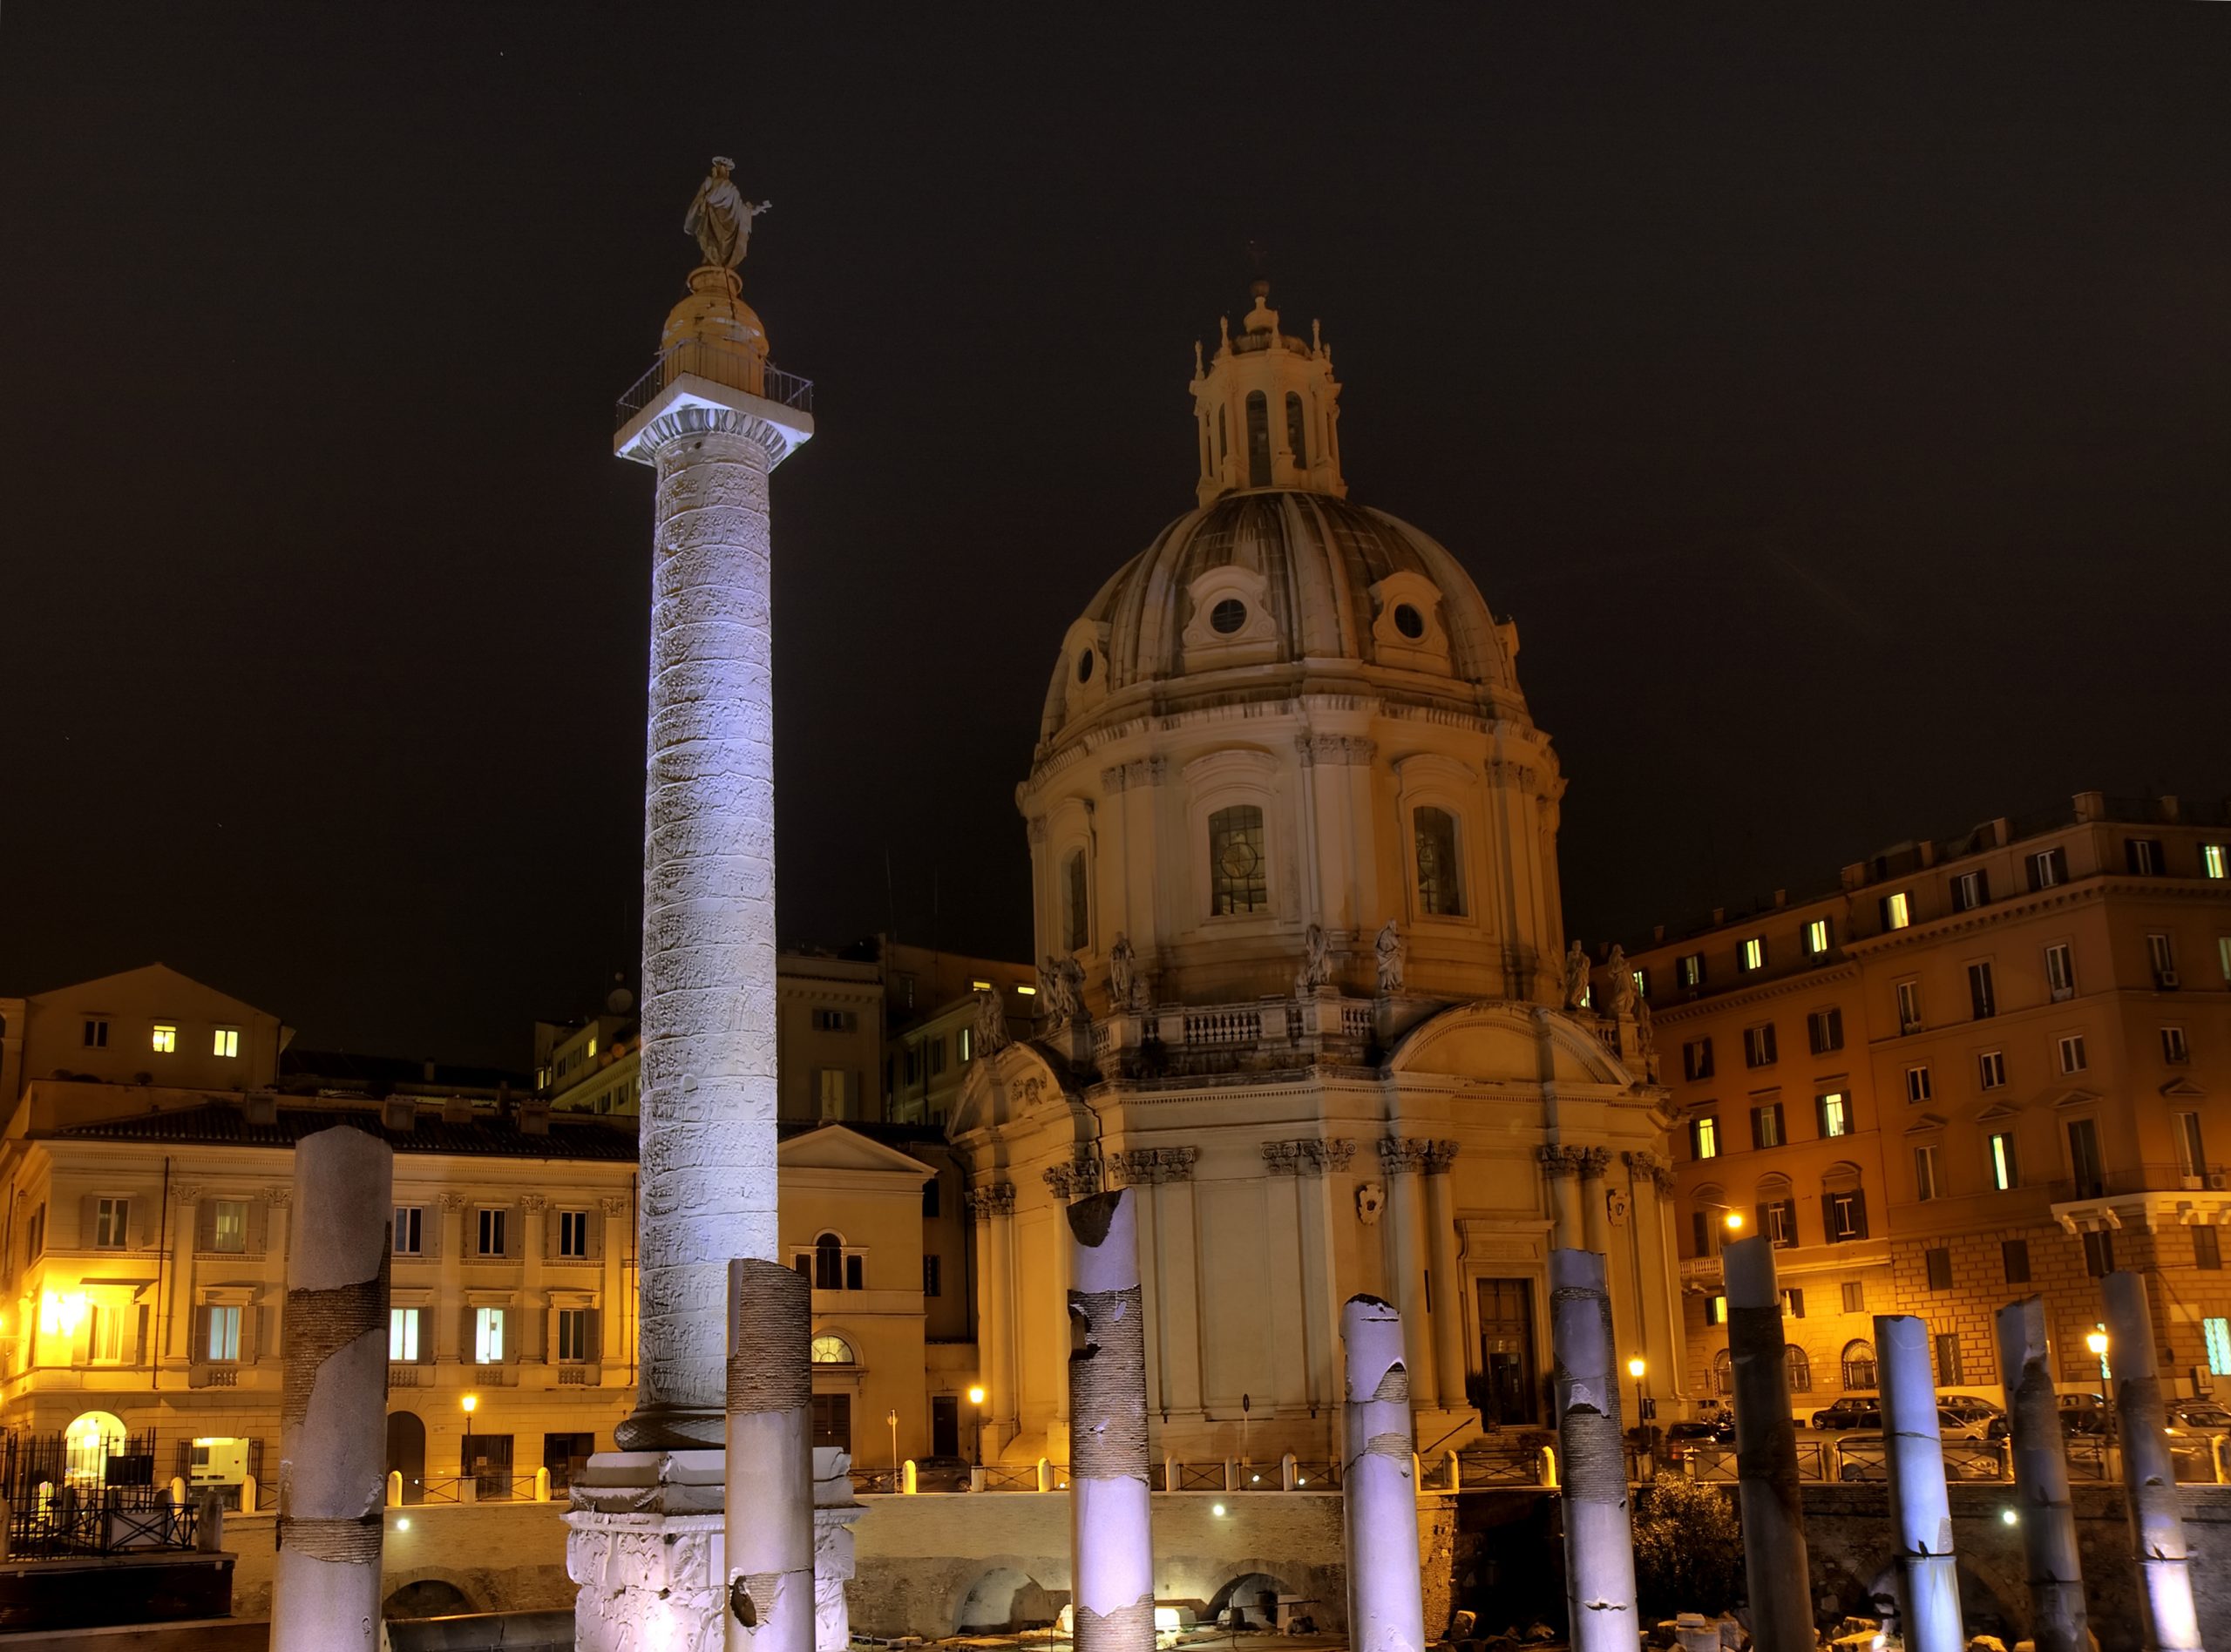 Trajan's Column at Night, Trajan's Forum, Rome, Italy